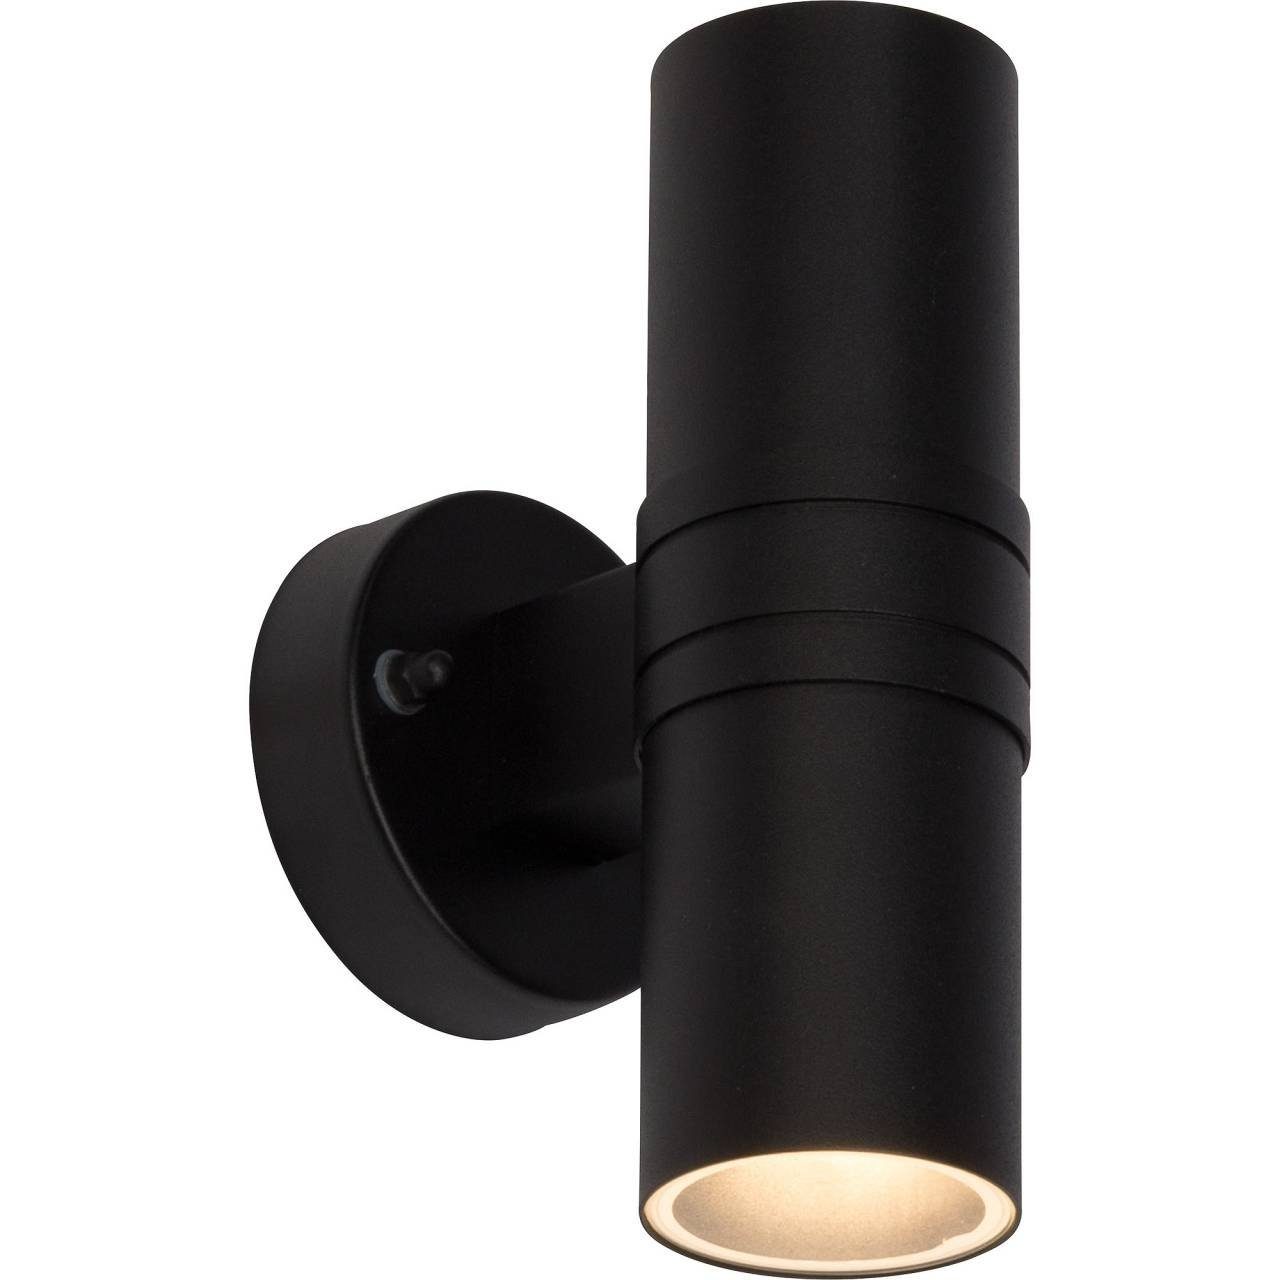 Sparangebot Hanni Außenwandleuchte LED 3W 2x LED-PAR51, 2flg Hanni, Lampe GU10, schwarz Außen-Wandleuchte Brilliant LED